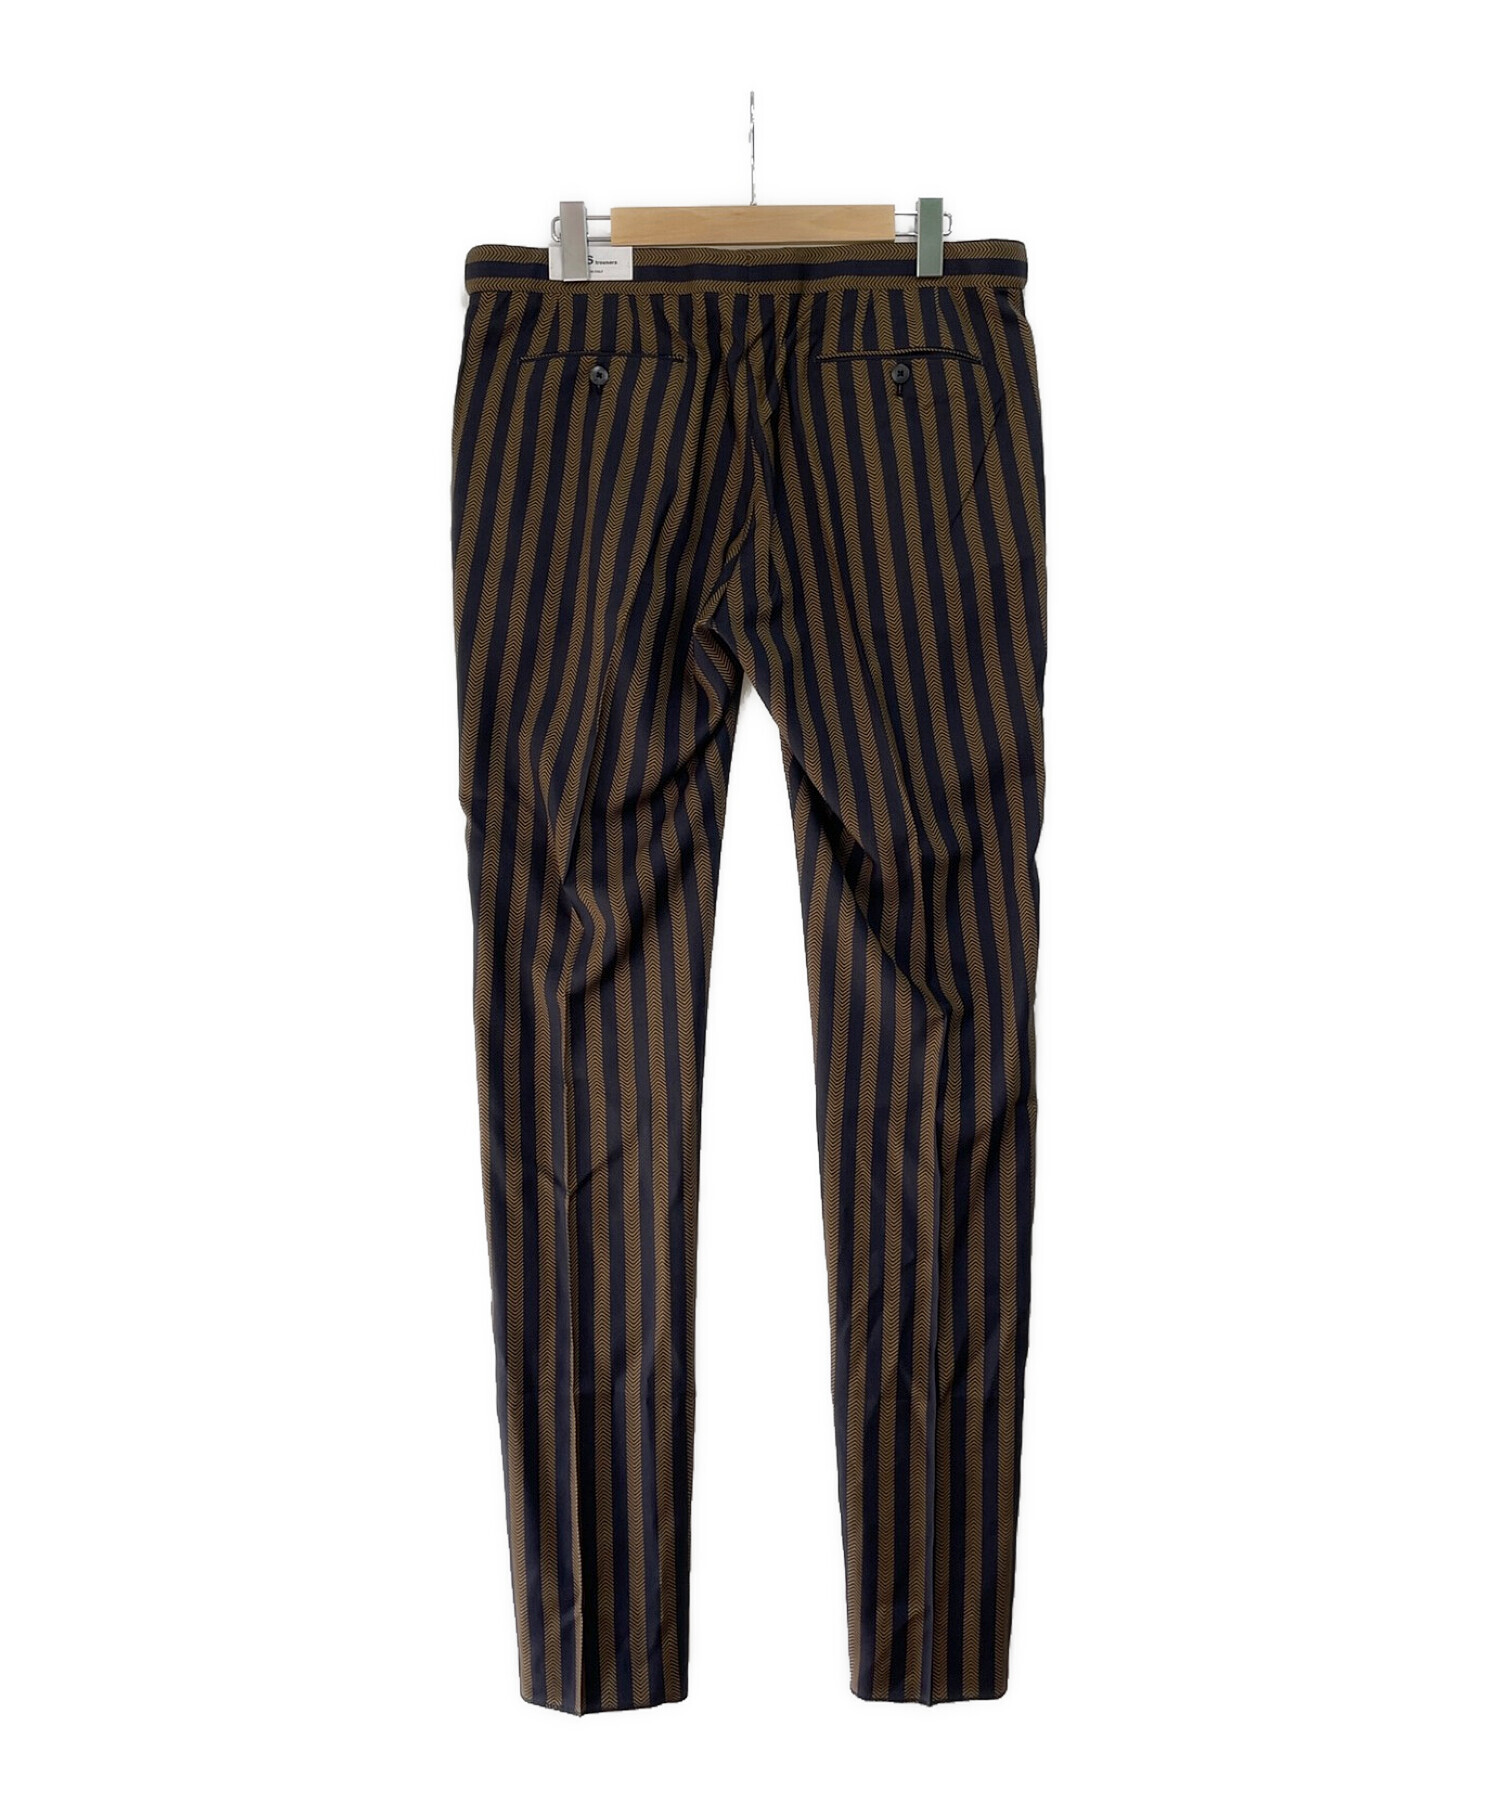 GBS trousers (ジービーエス トラウザーズ) ストライプパンツ ブラウン×ブラック サイズ:SIZE 52 未使用品